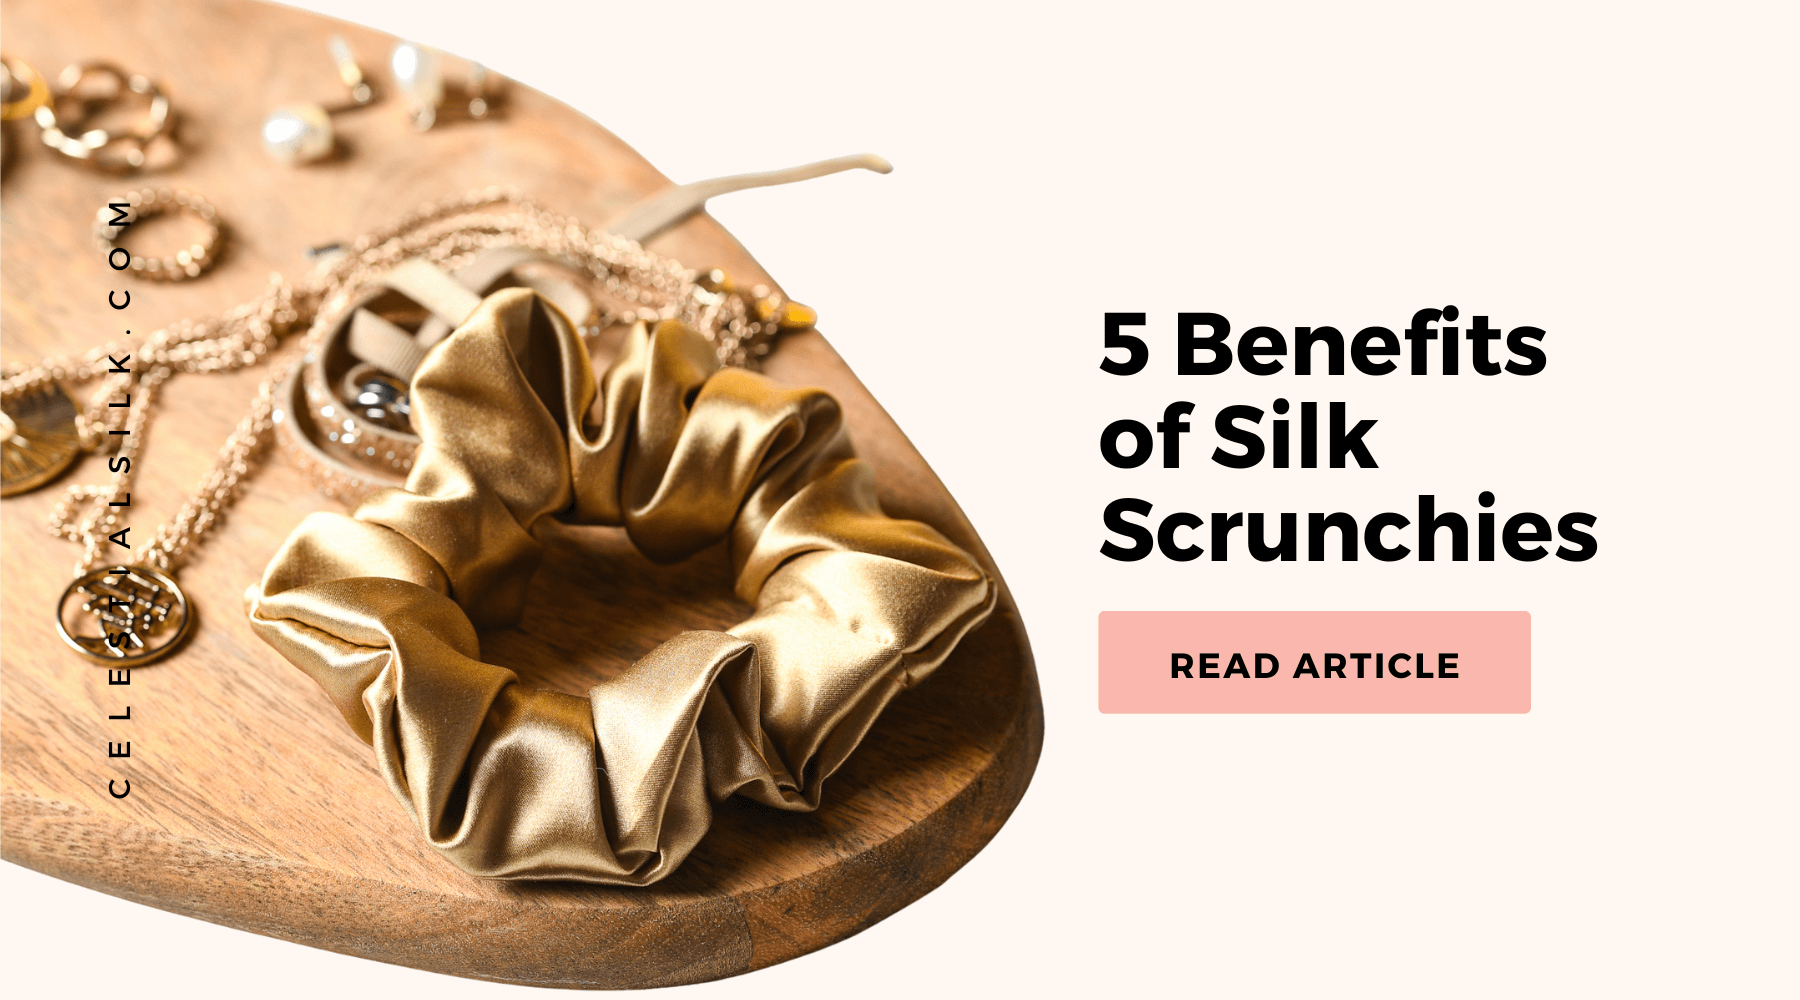 5 Benefits of Silk Scrunchies